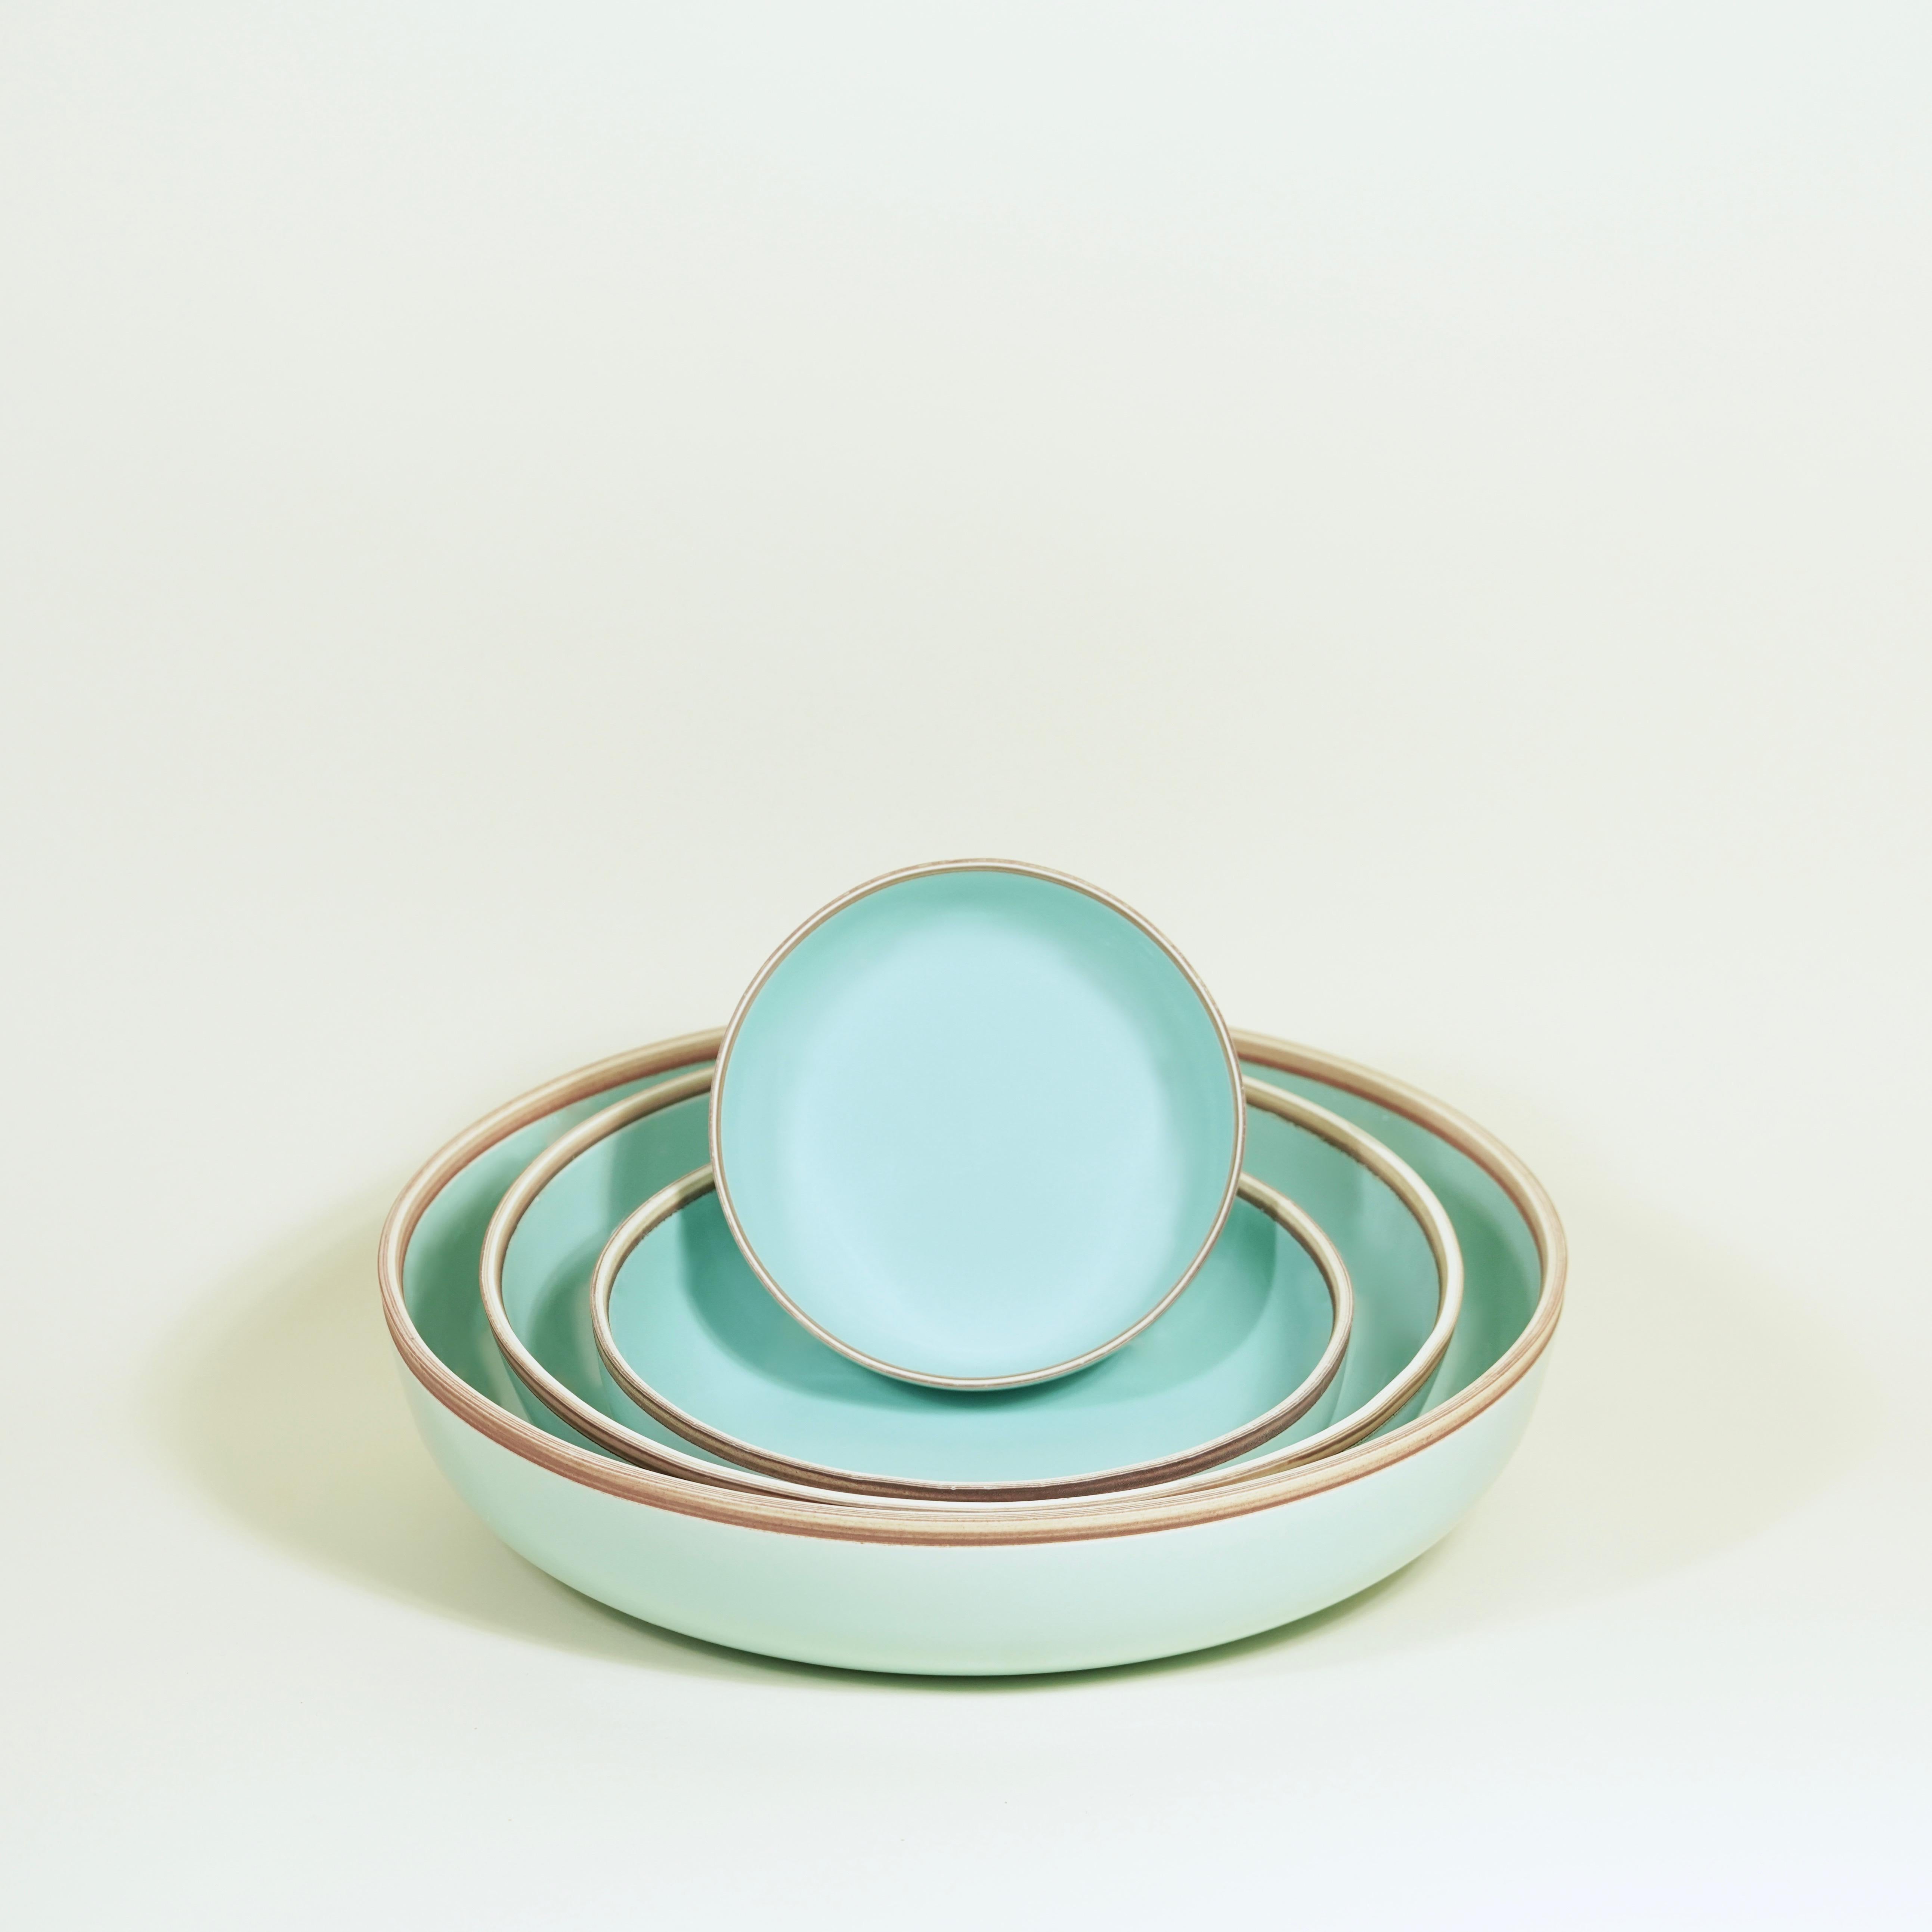 Chinese Medium Celadon Glazed Porcelain Hermit Bowl with Rustic Rim